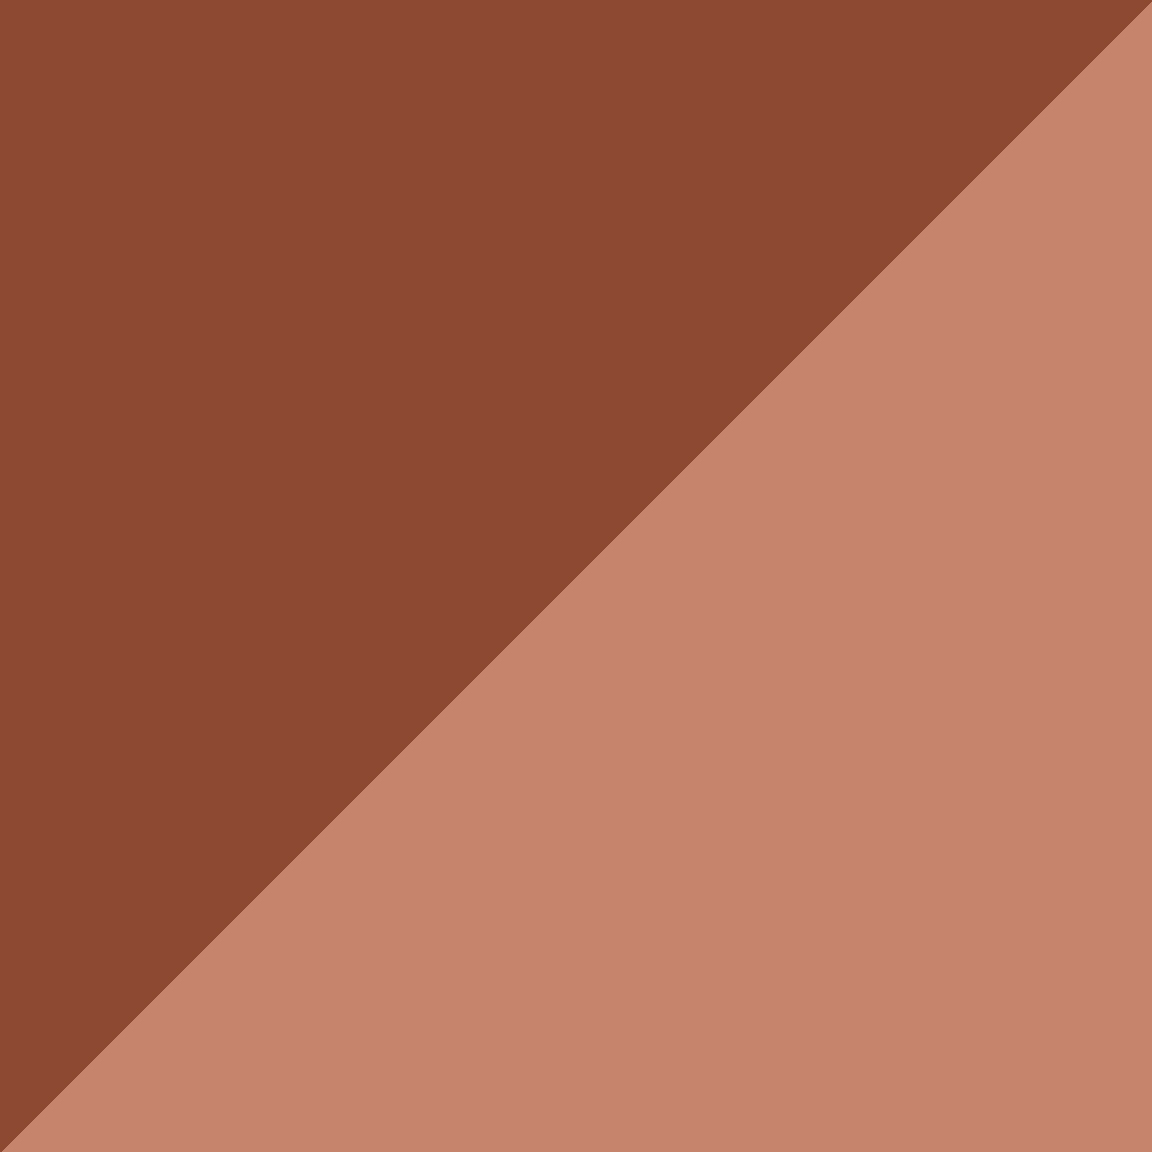 Copper Brown/Beige Red